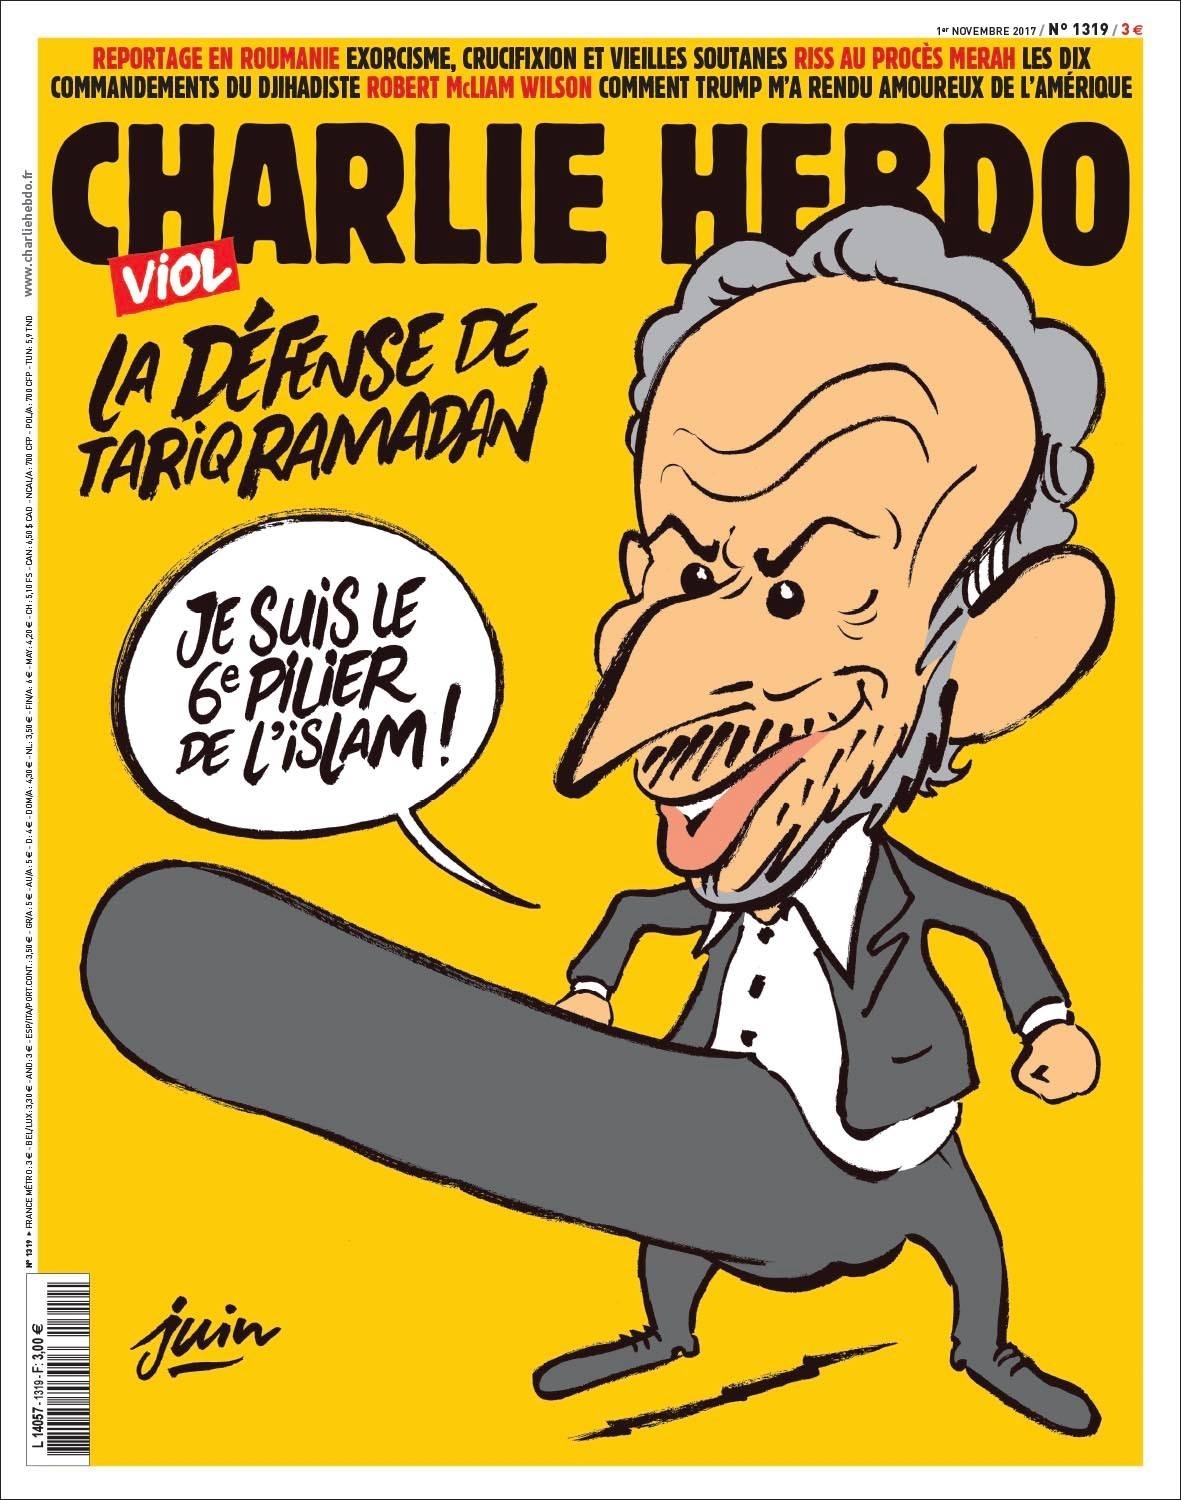 Charlie Hebdo Receives New Death Threats After Drawing Islamic Scholar Tariq Ramadan With Erection